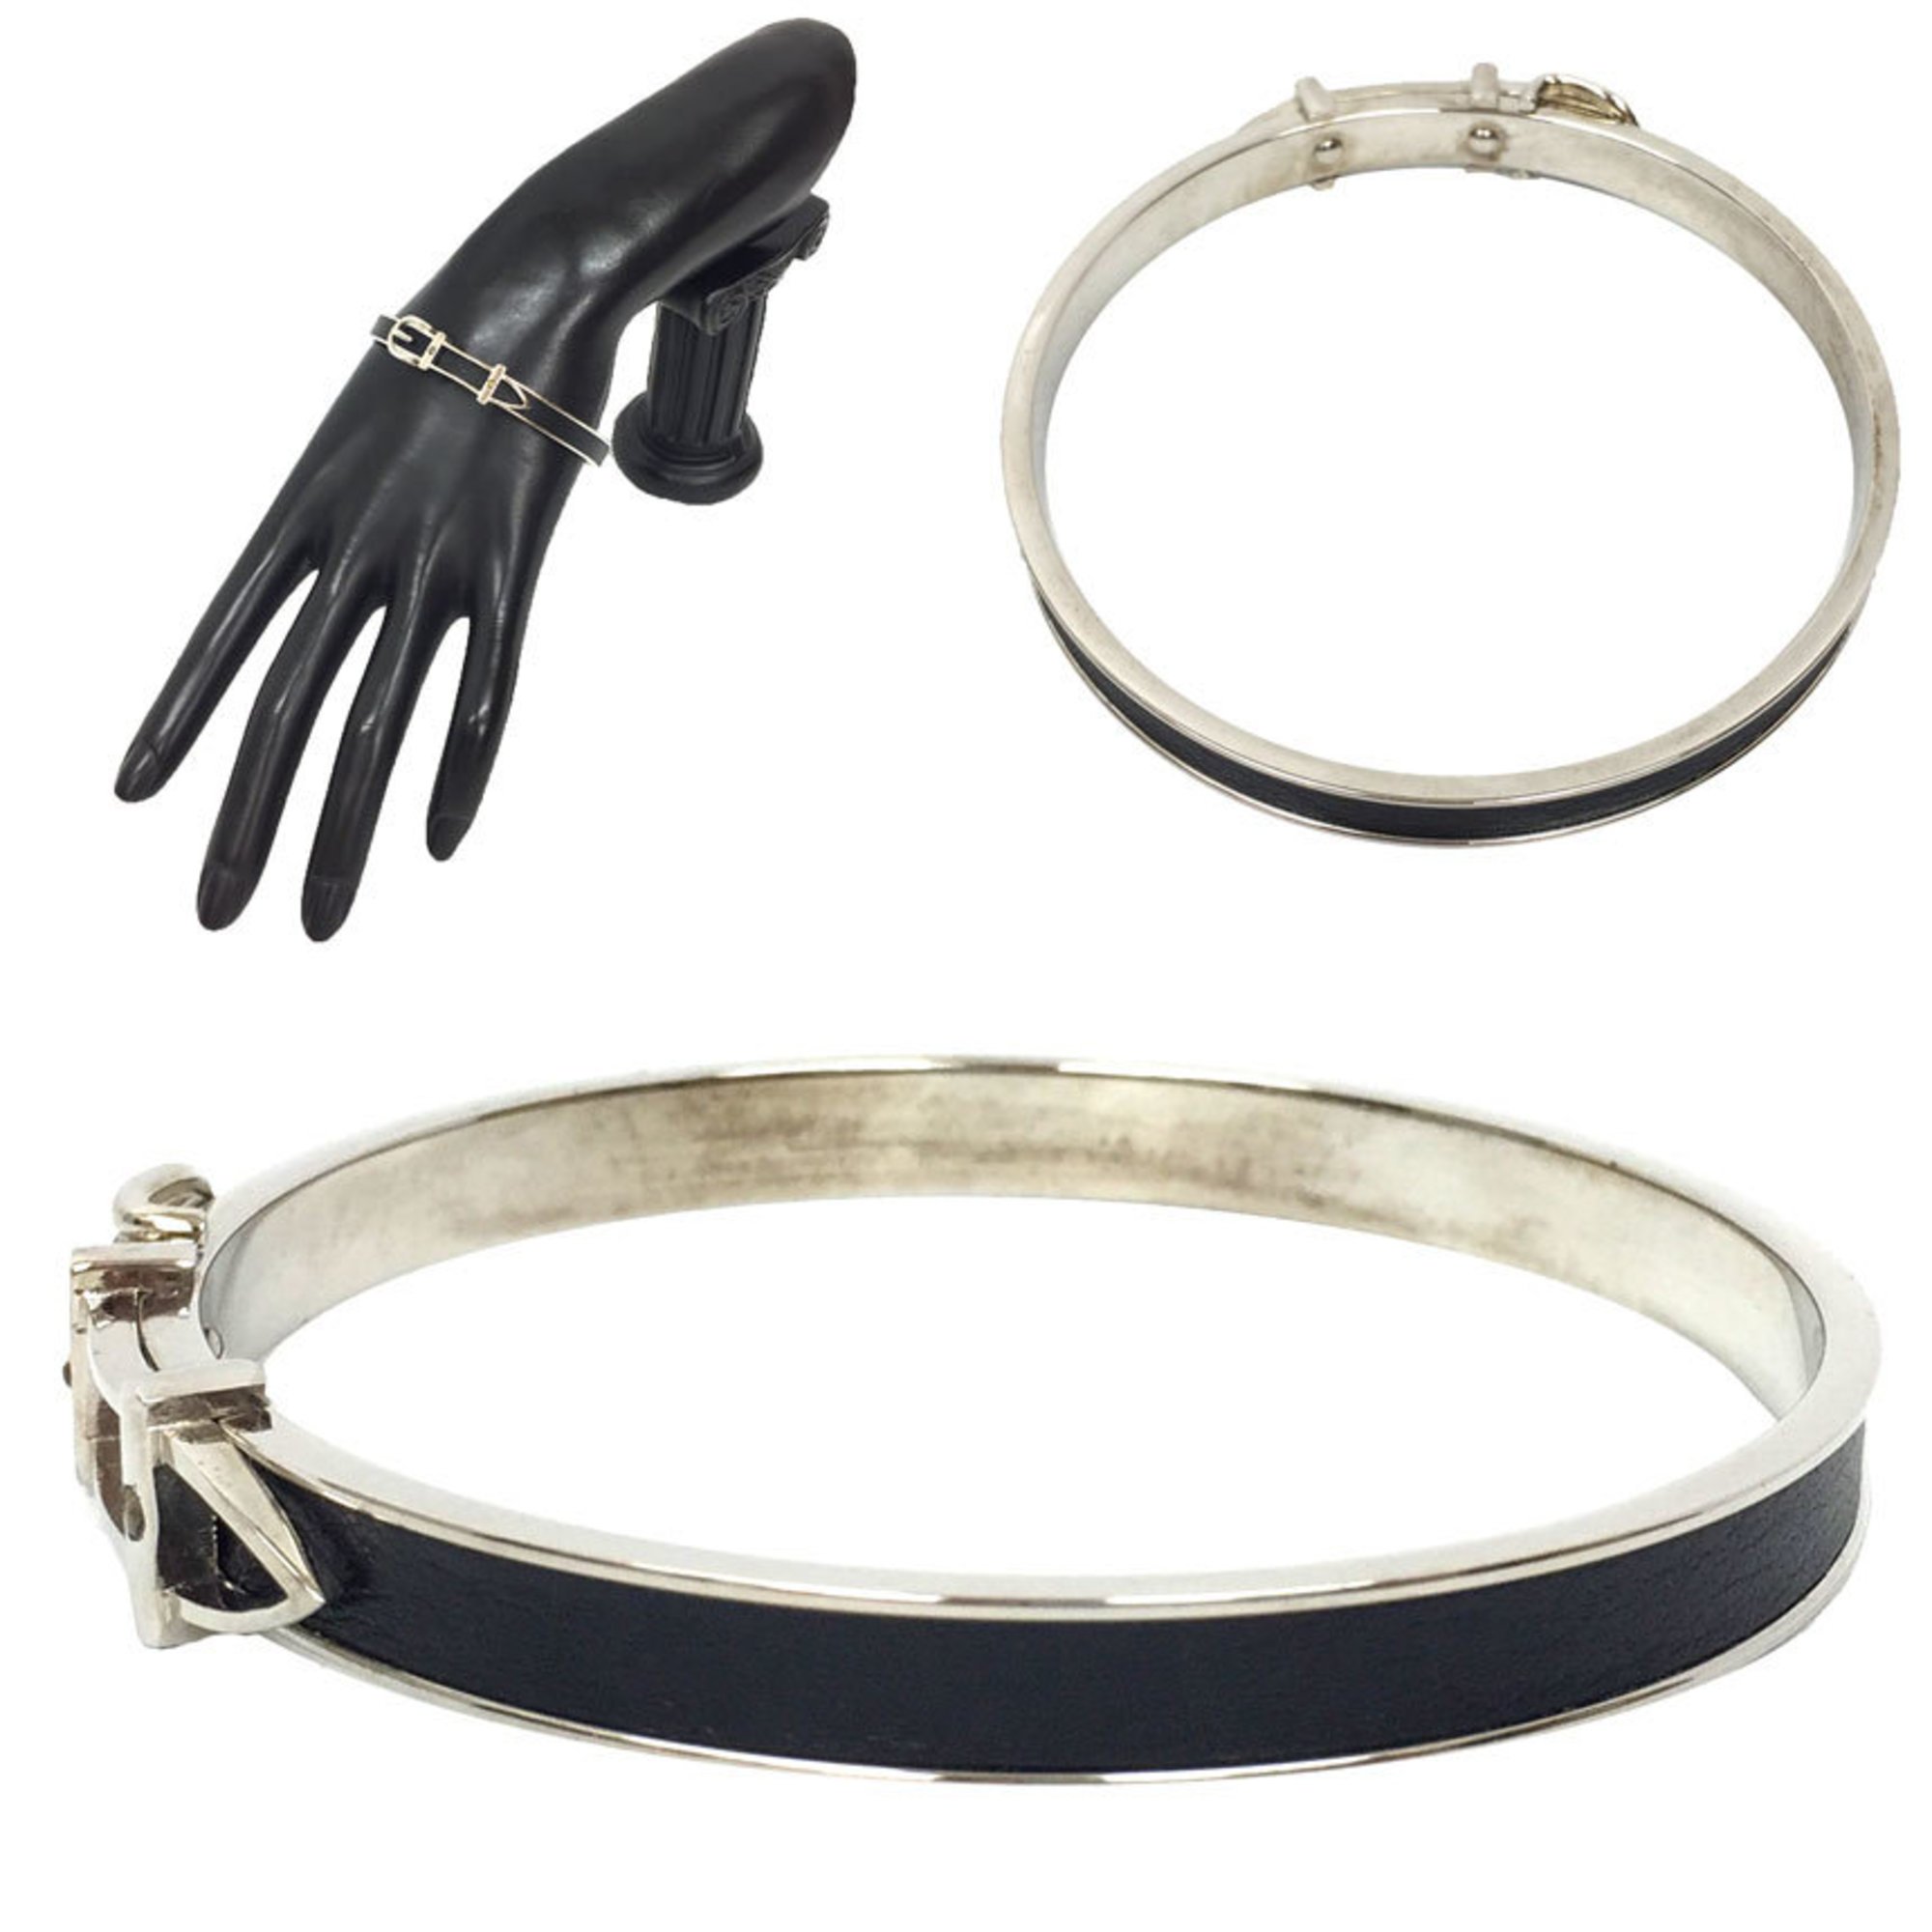 HERMES Belt motif bangle bracelet black x silver aq9982